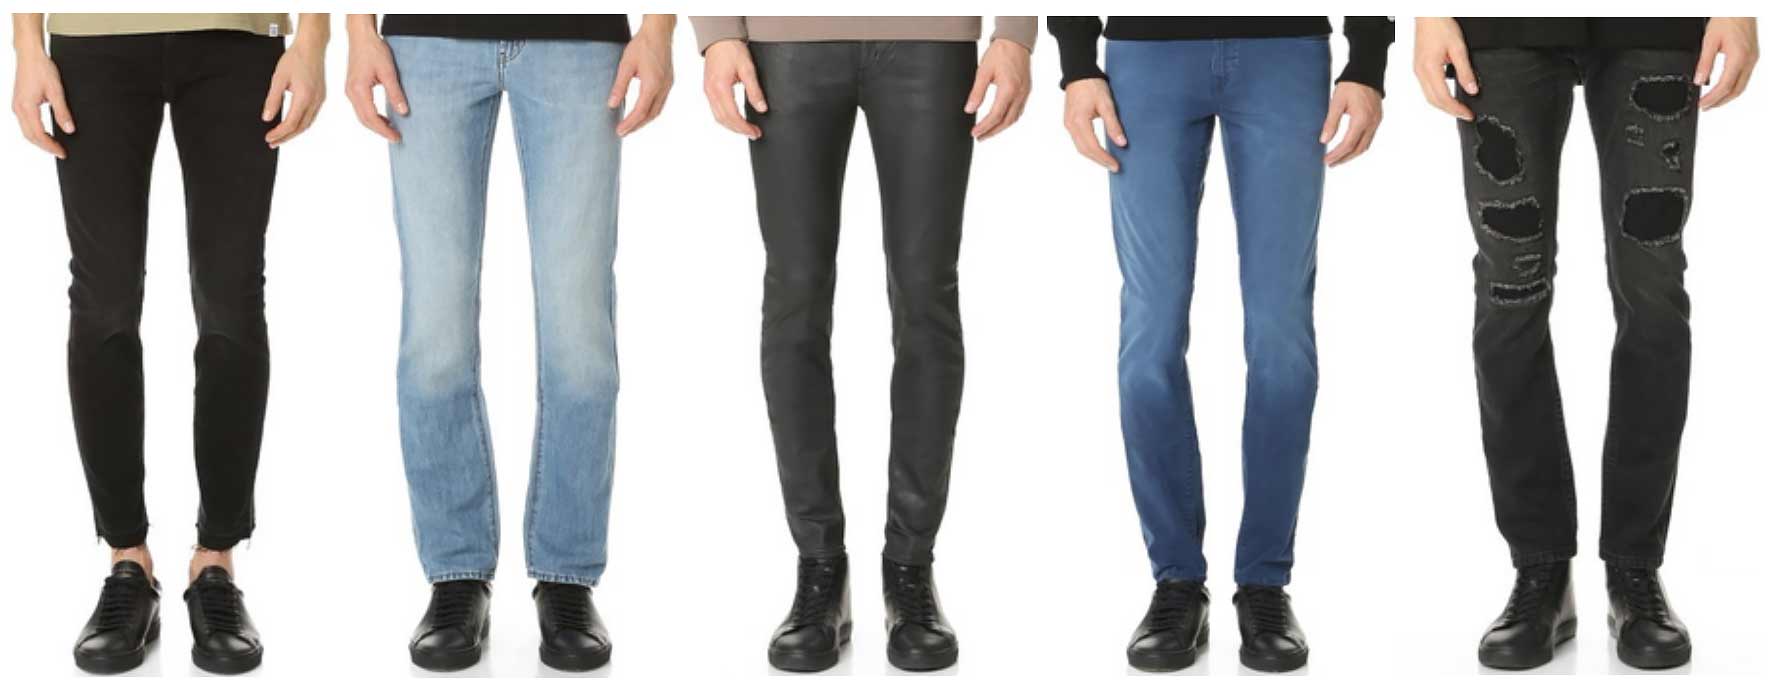 jeans-choices-for-men-november